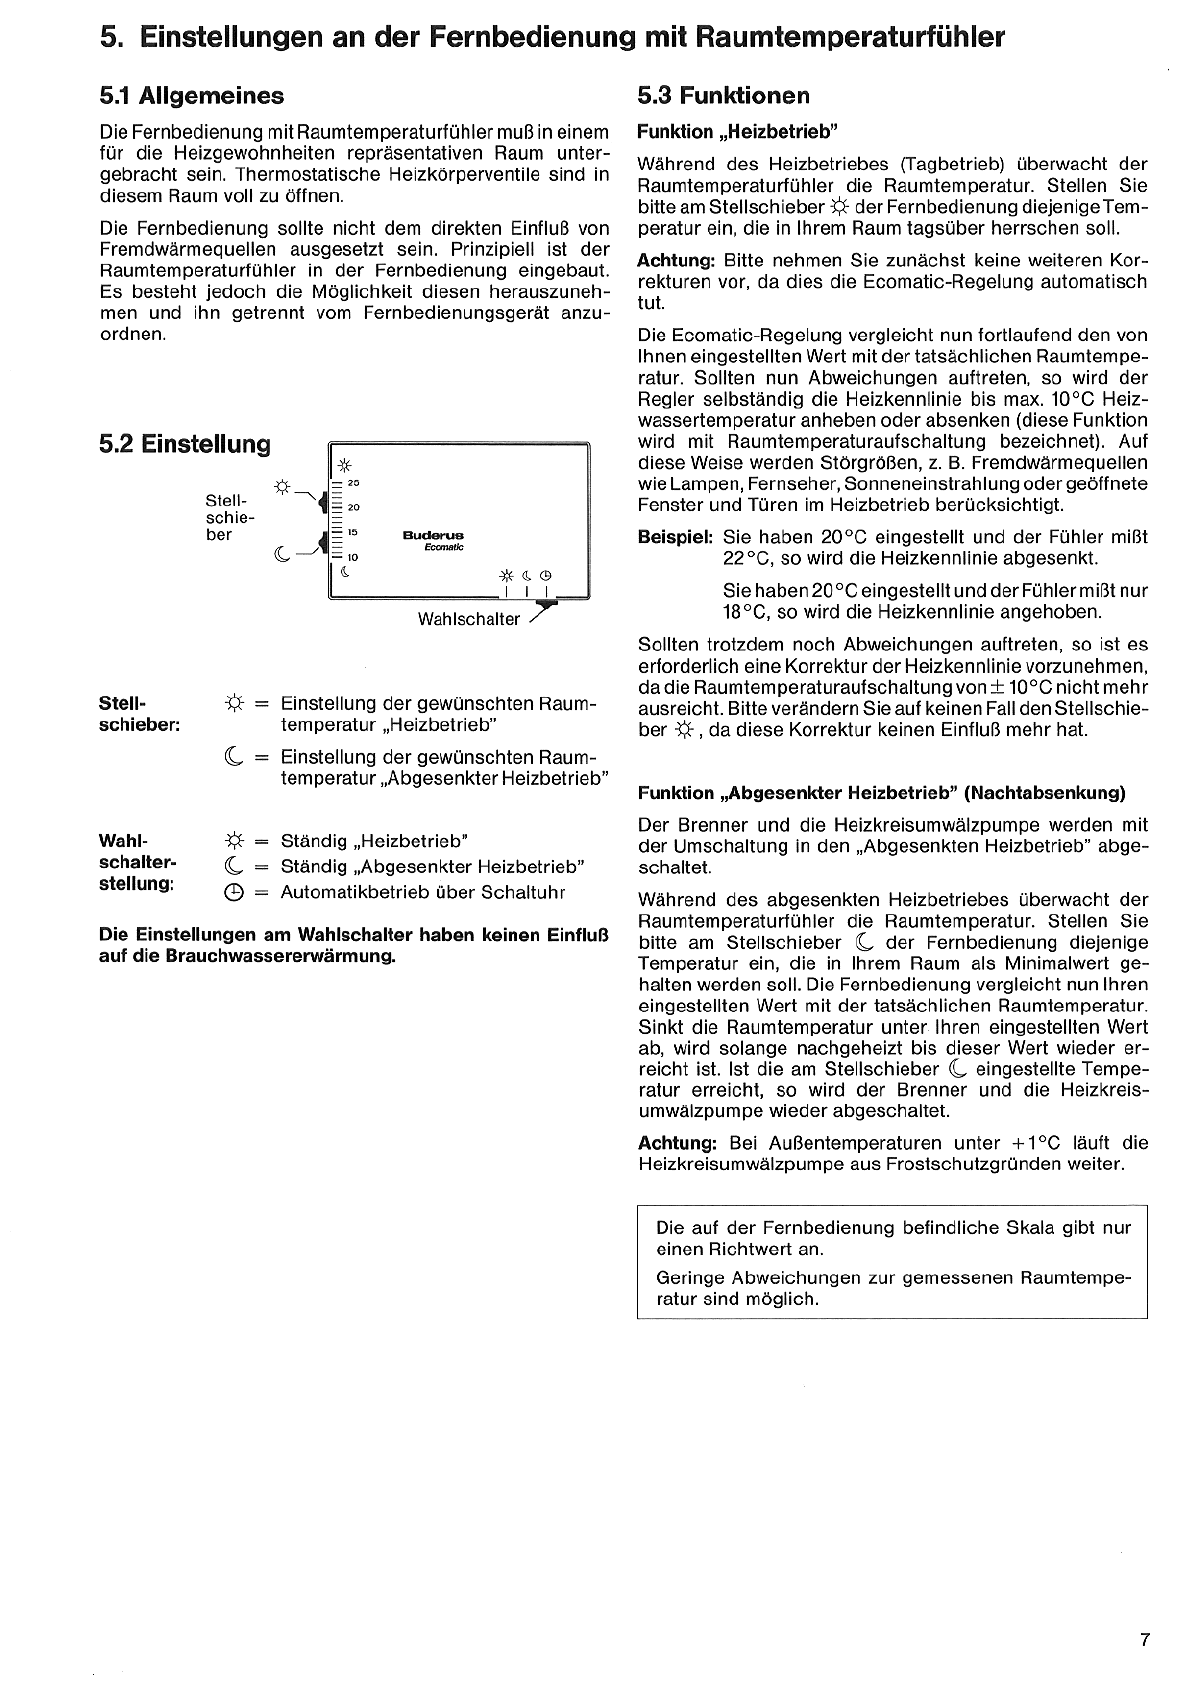 buderus ecomatic 4000 schaltplan pdf free